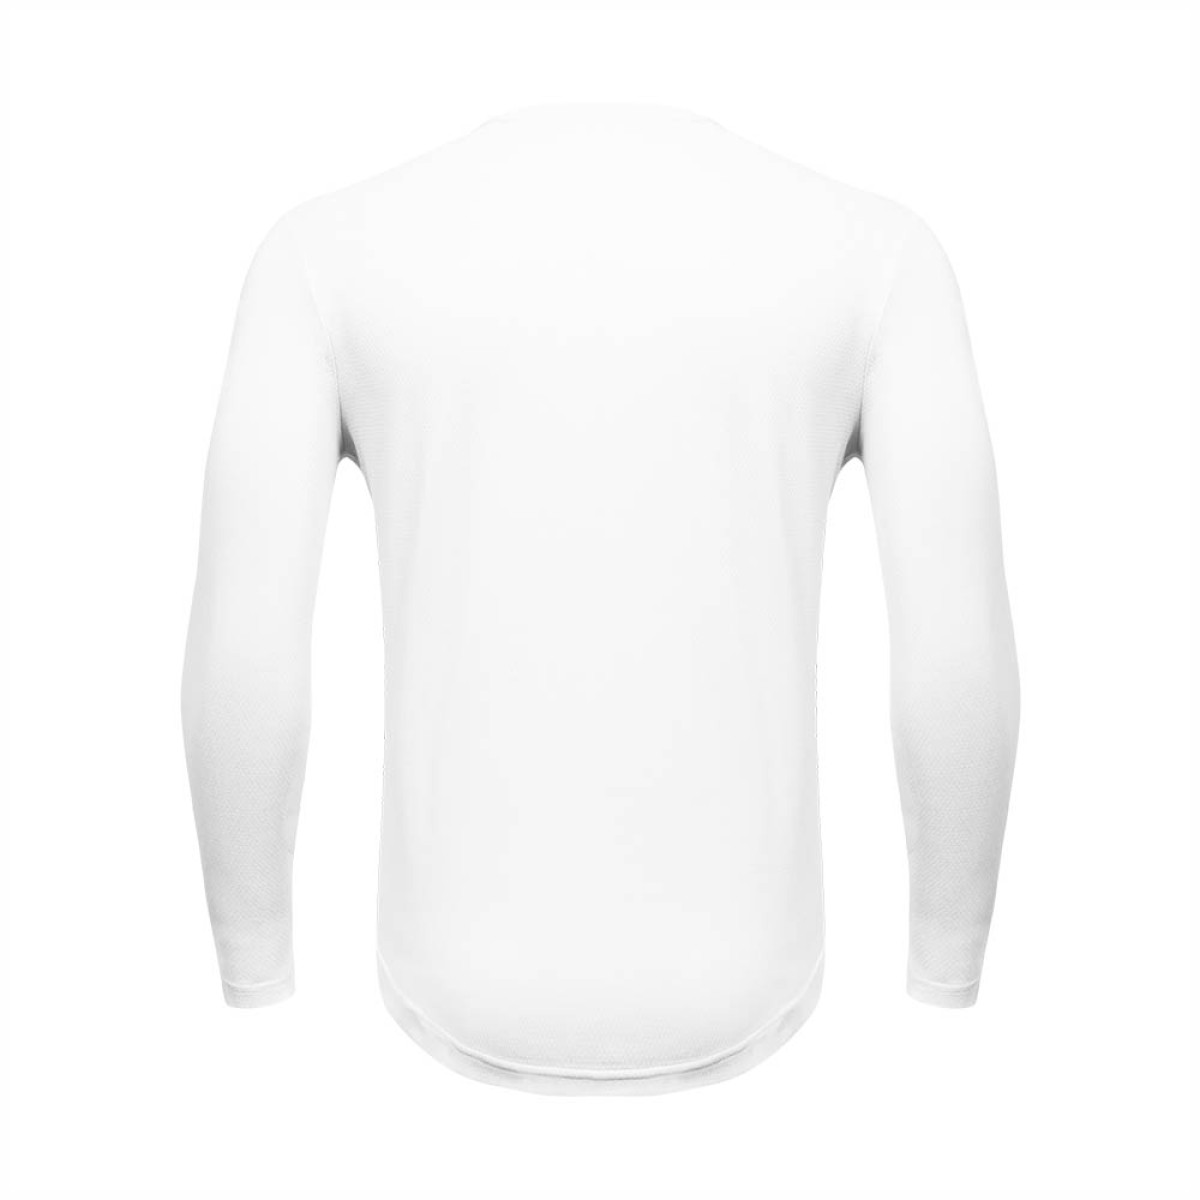 mens-long-sleeve-t-shirt-kmct35311